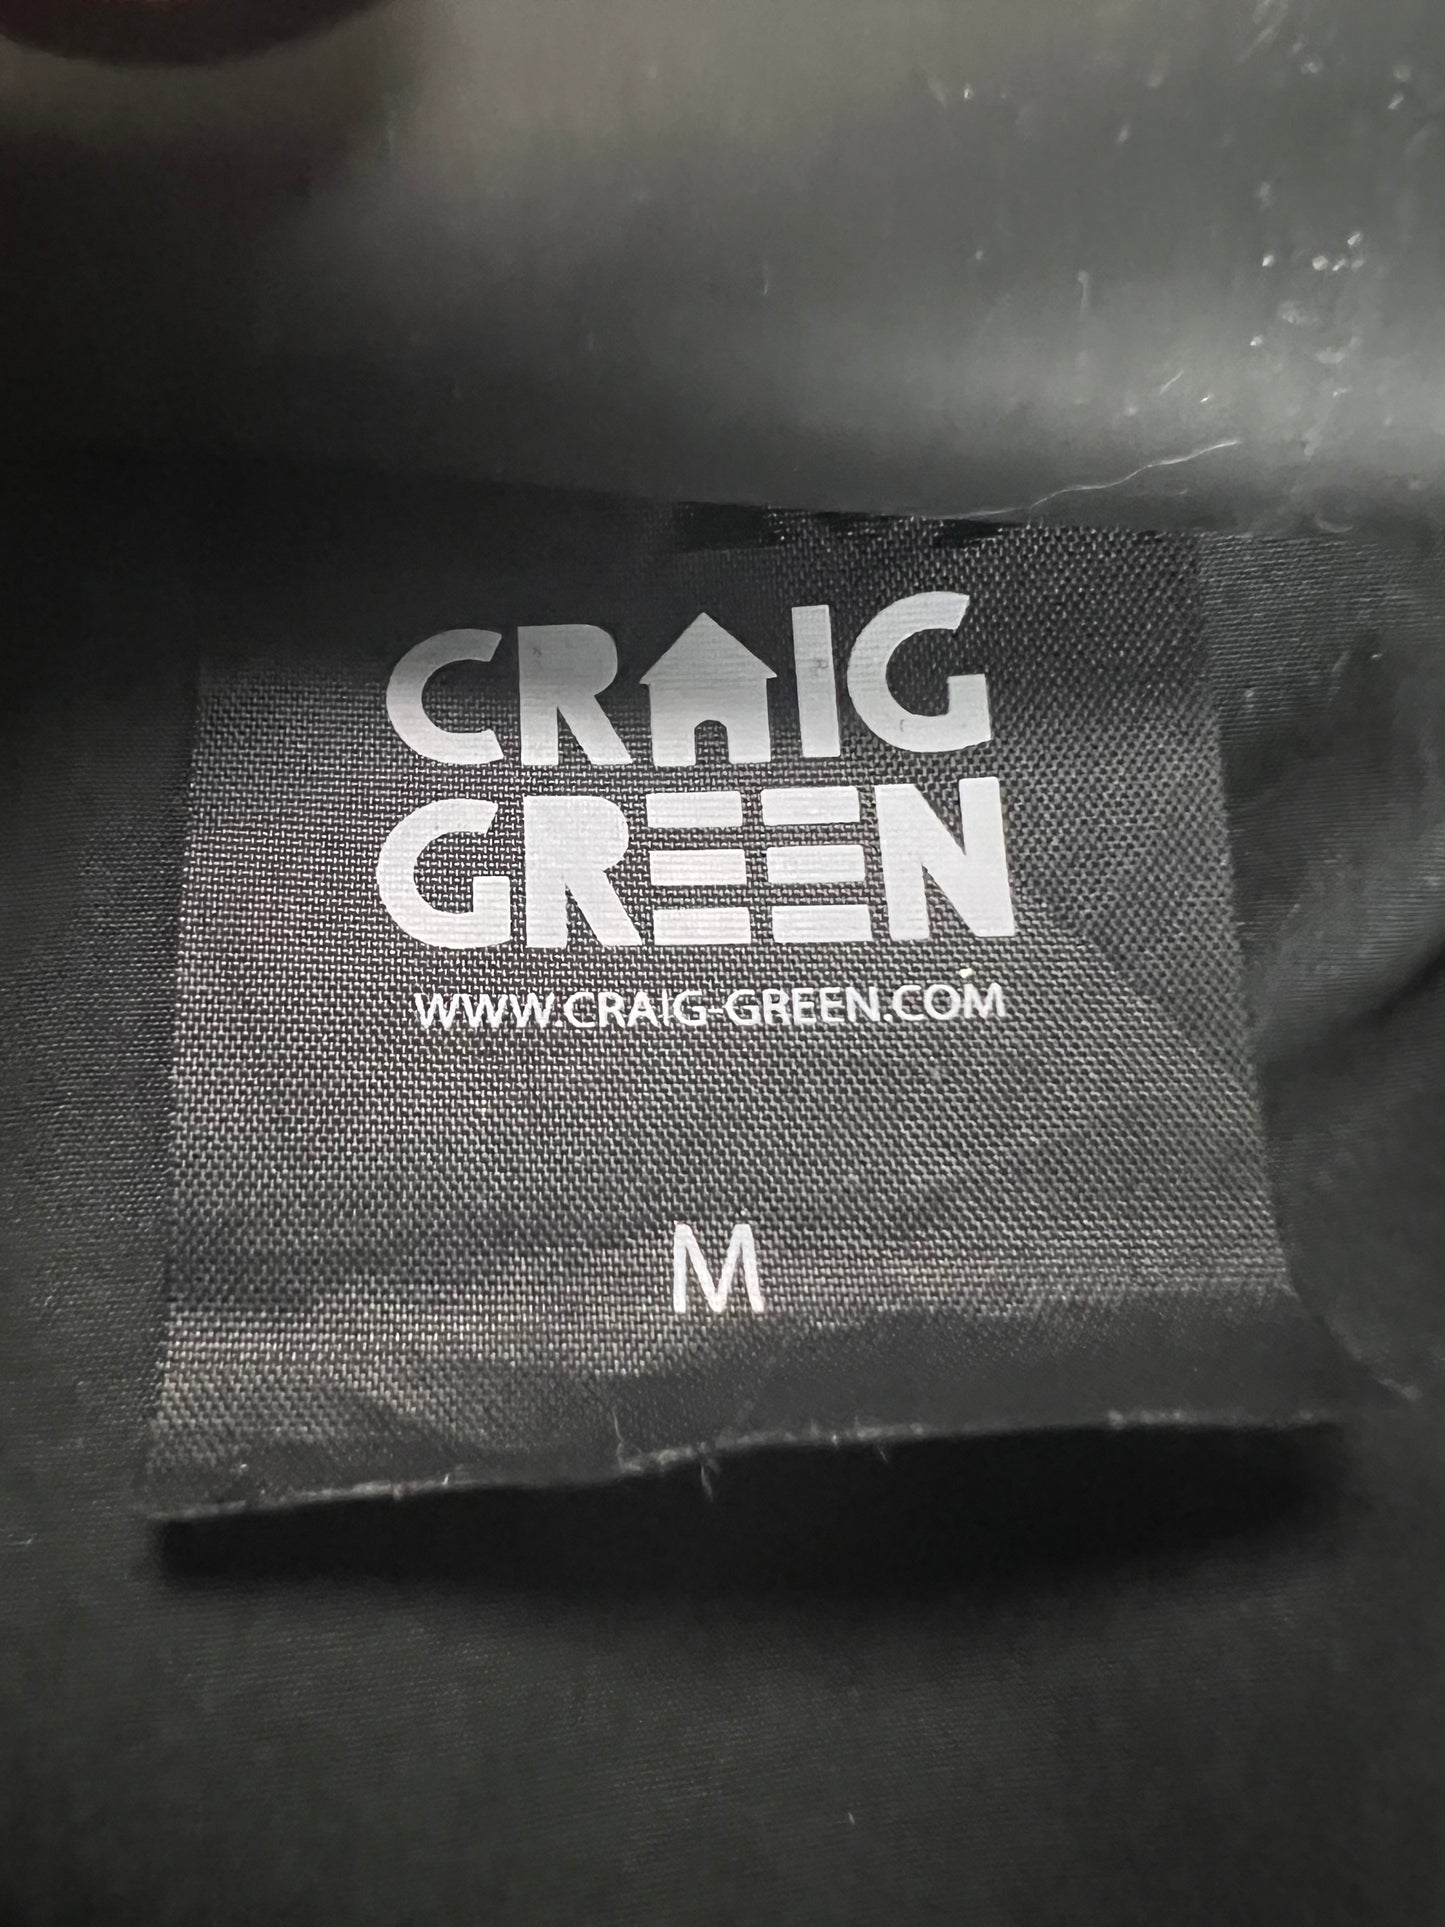 Craig Green AW17 runway scuba coat in black SZ:M